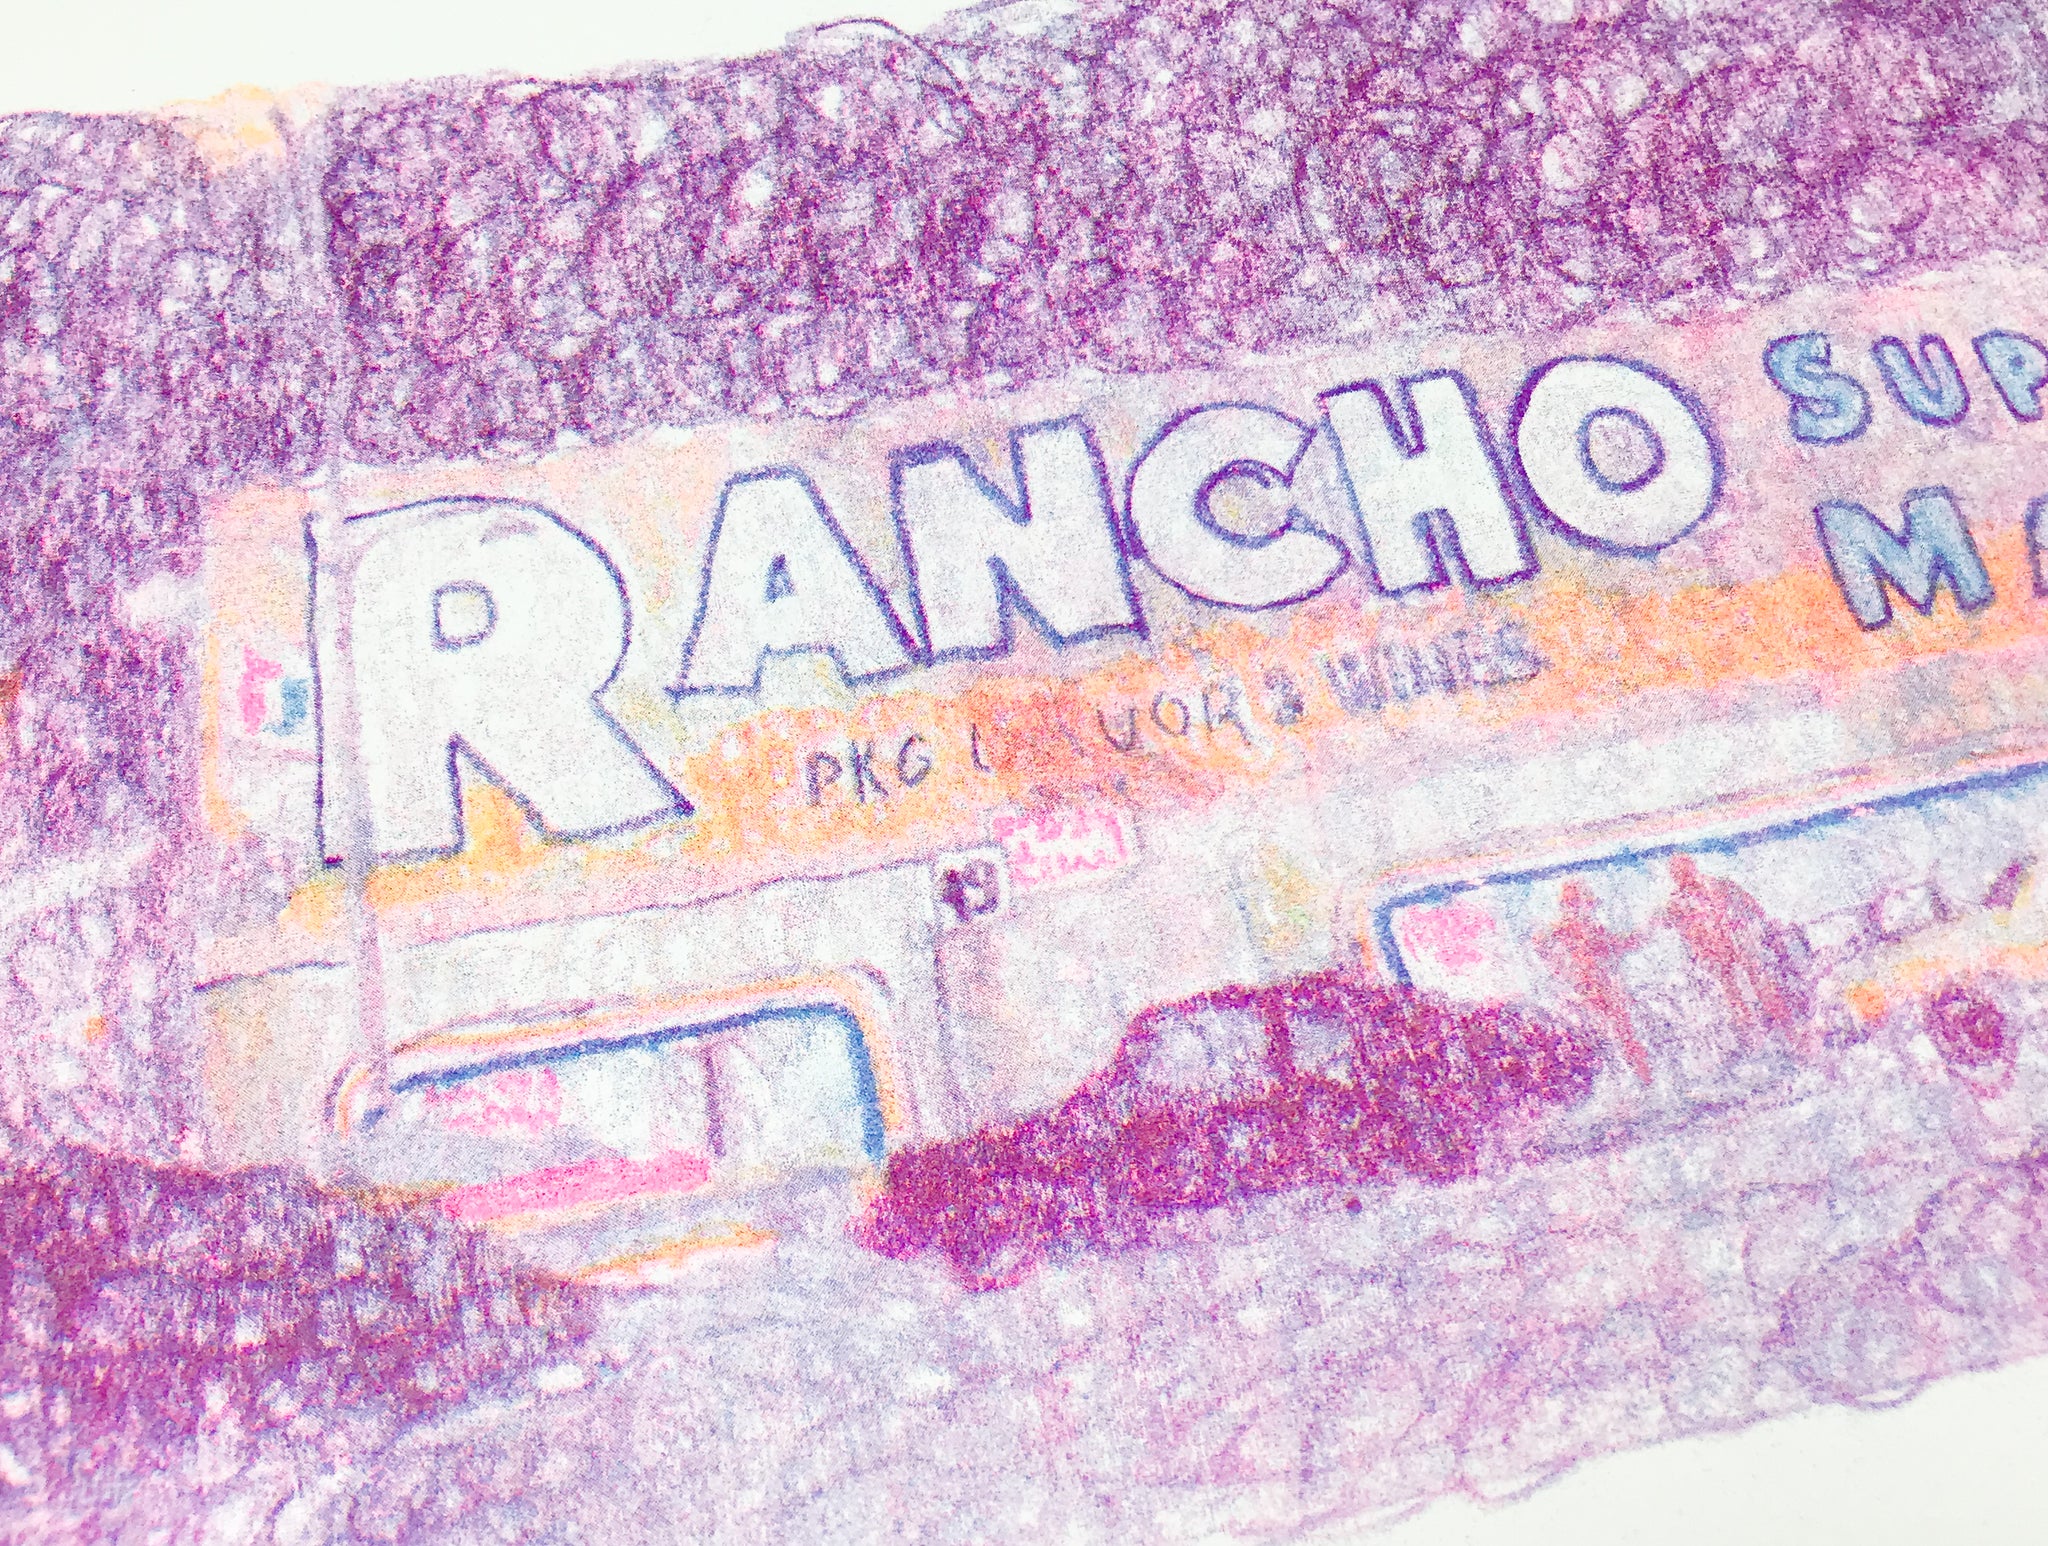 Rancho Supermarket